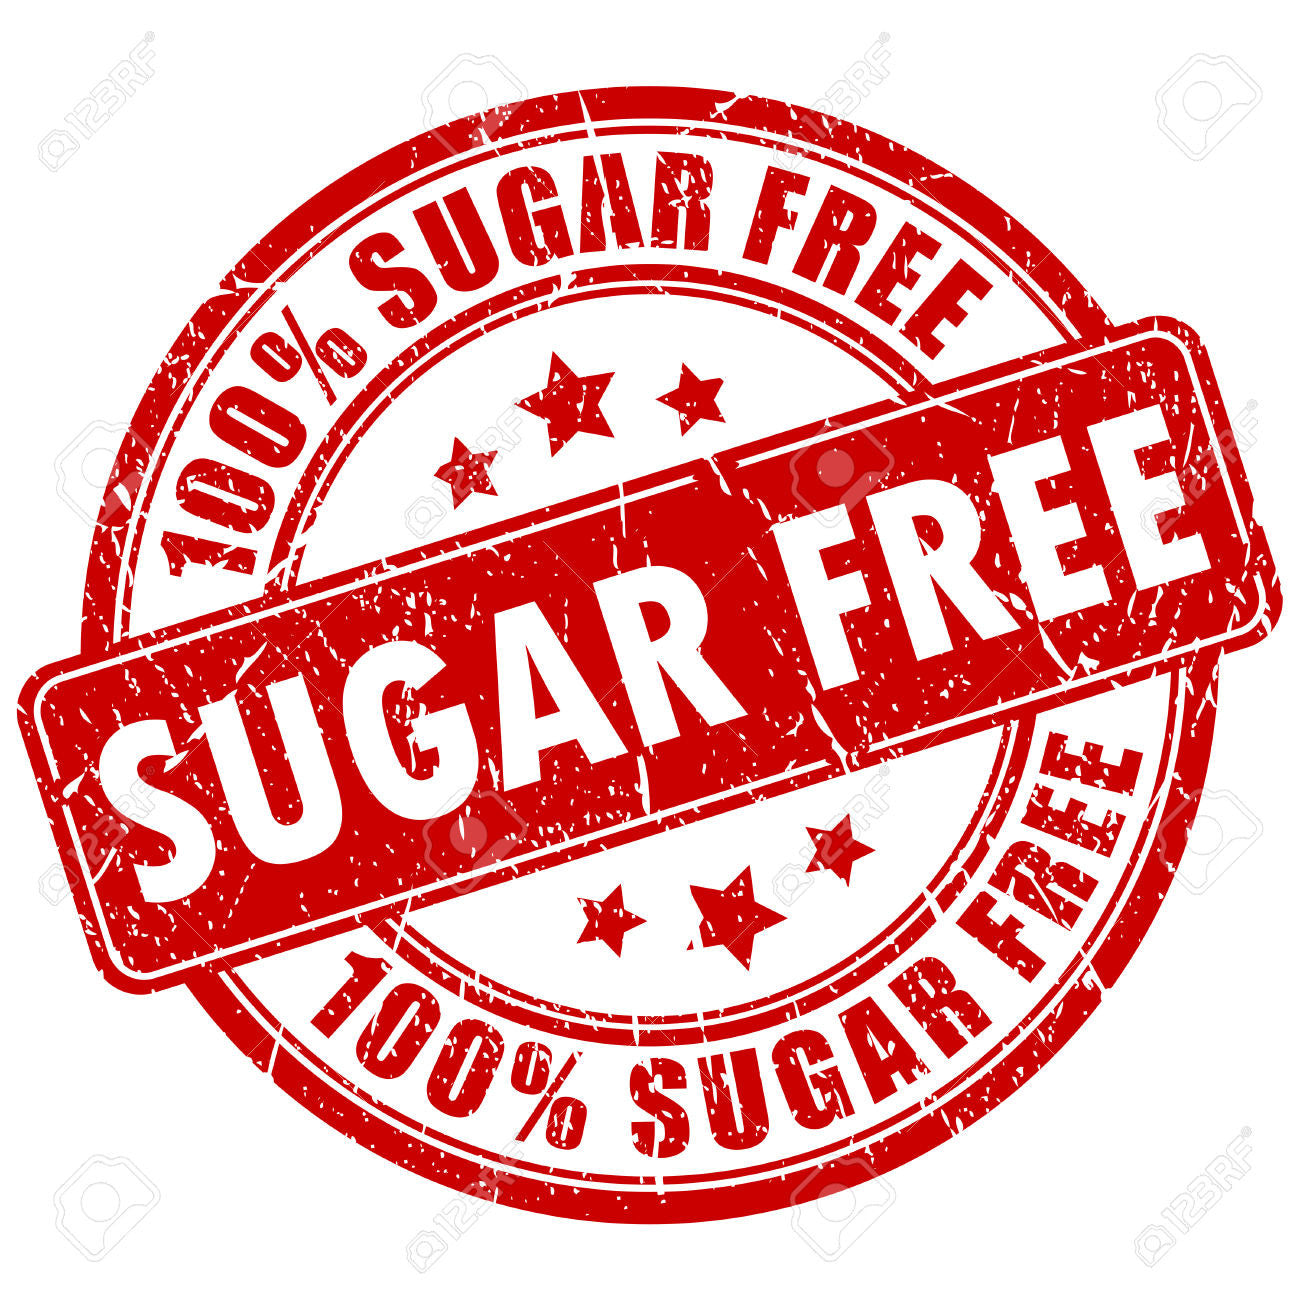 Sugar Free Treats